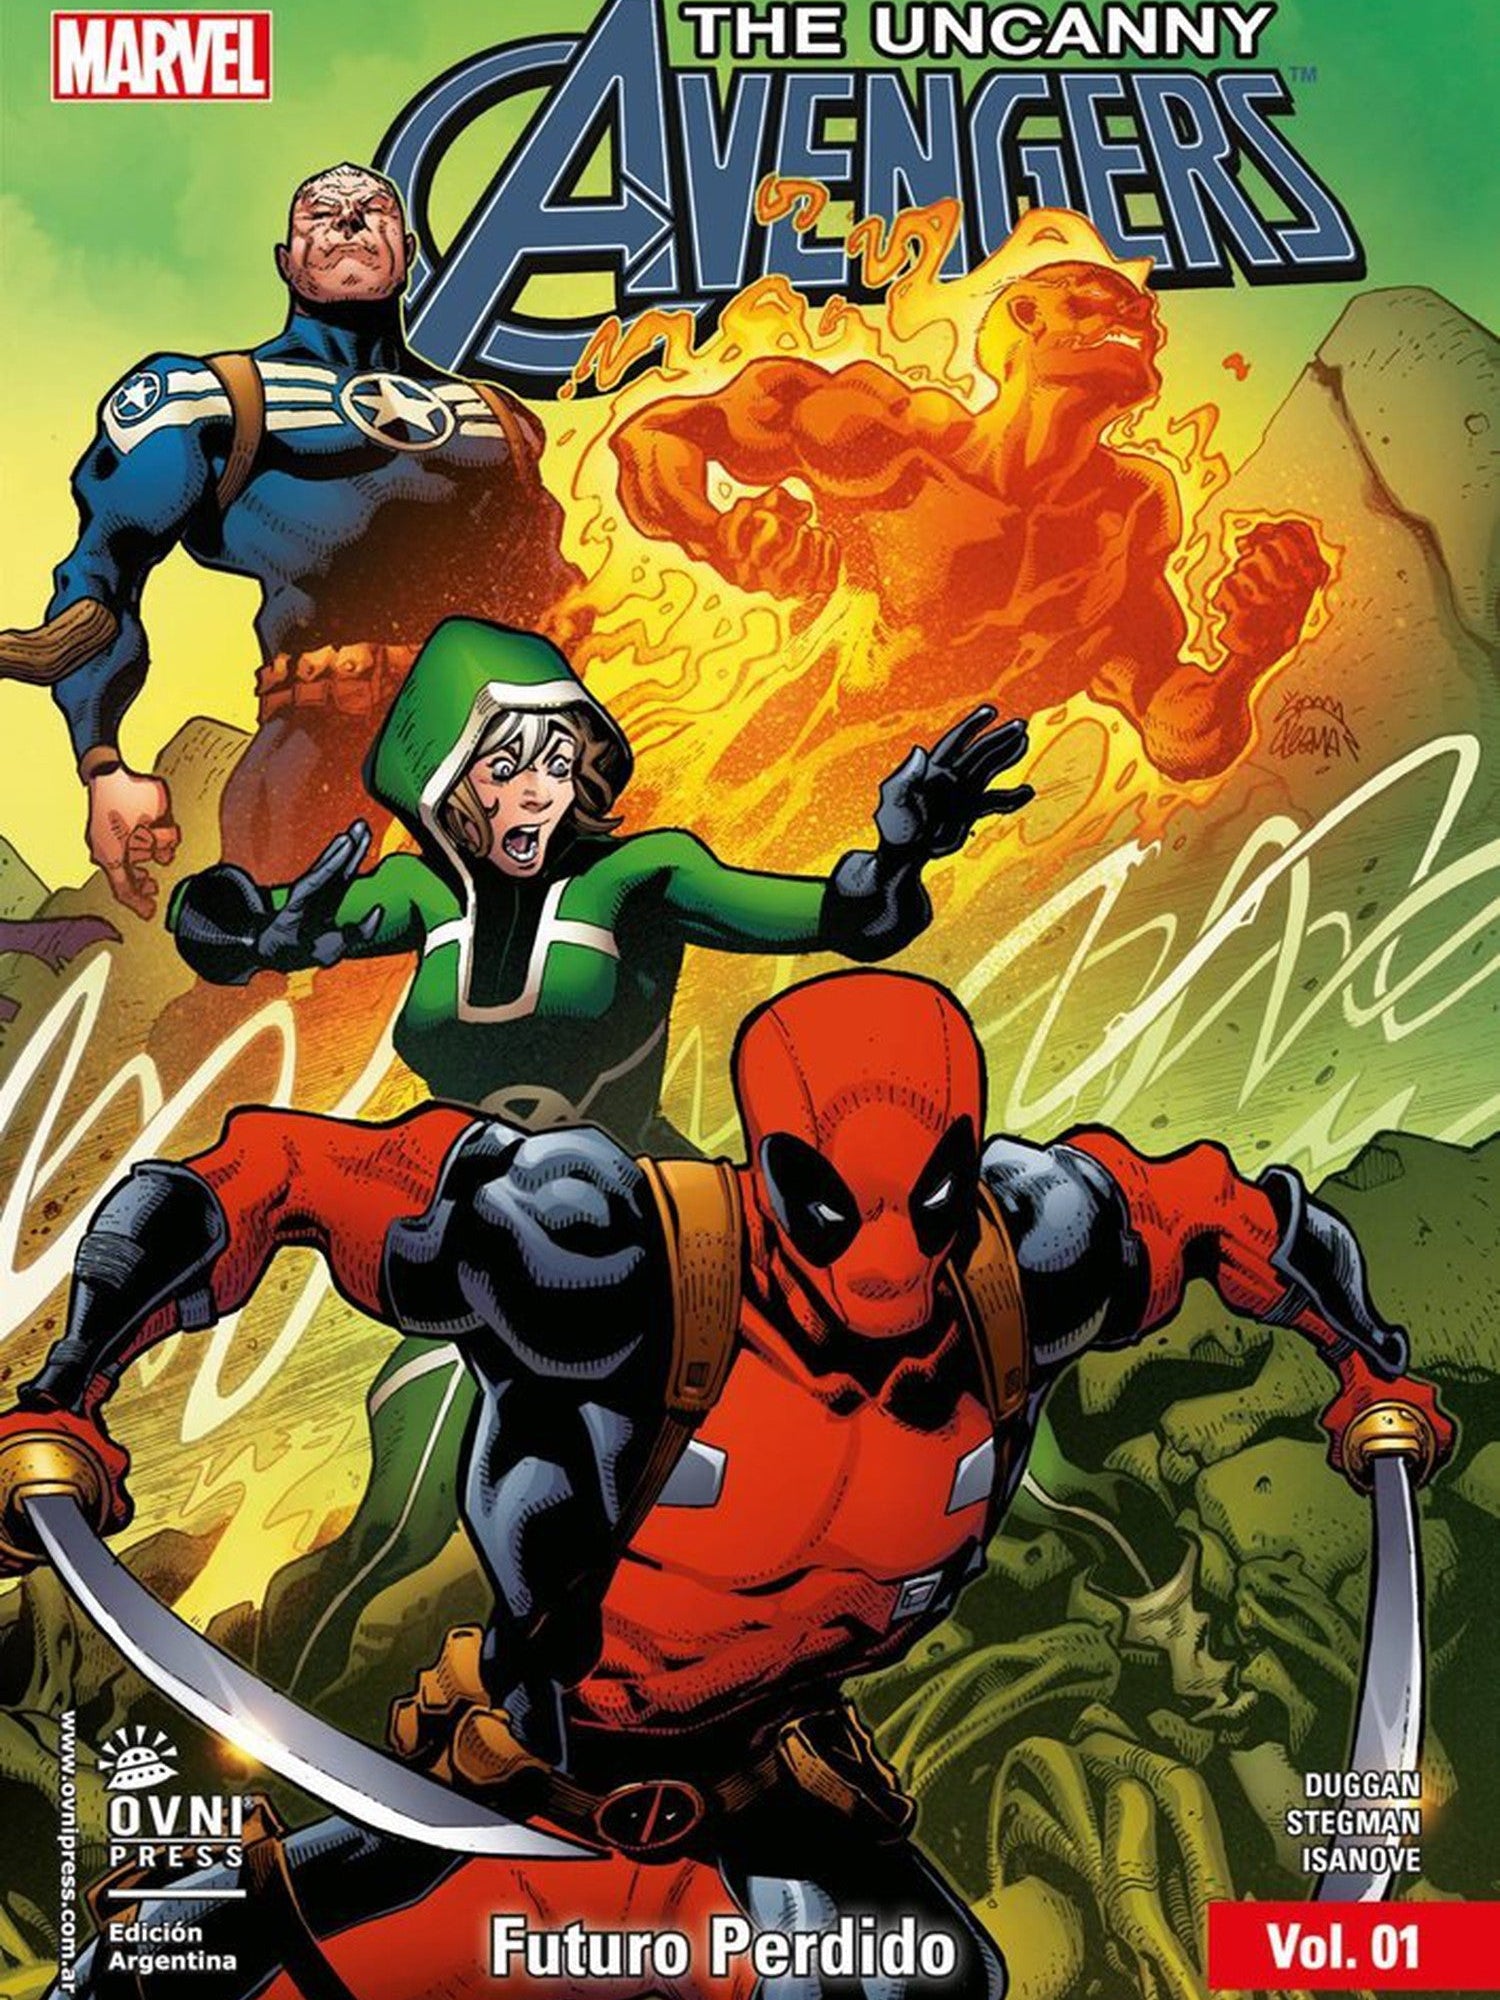 The Uncanny Avengers #1 Futuro Perdido OVNI Press ENcuadrocomics